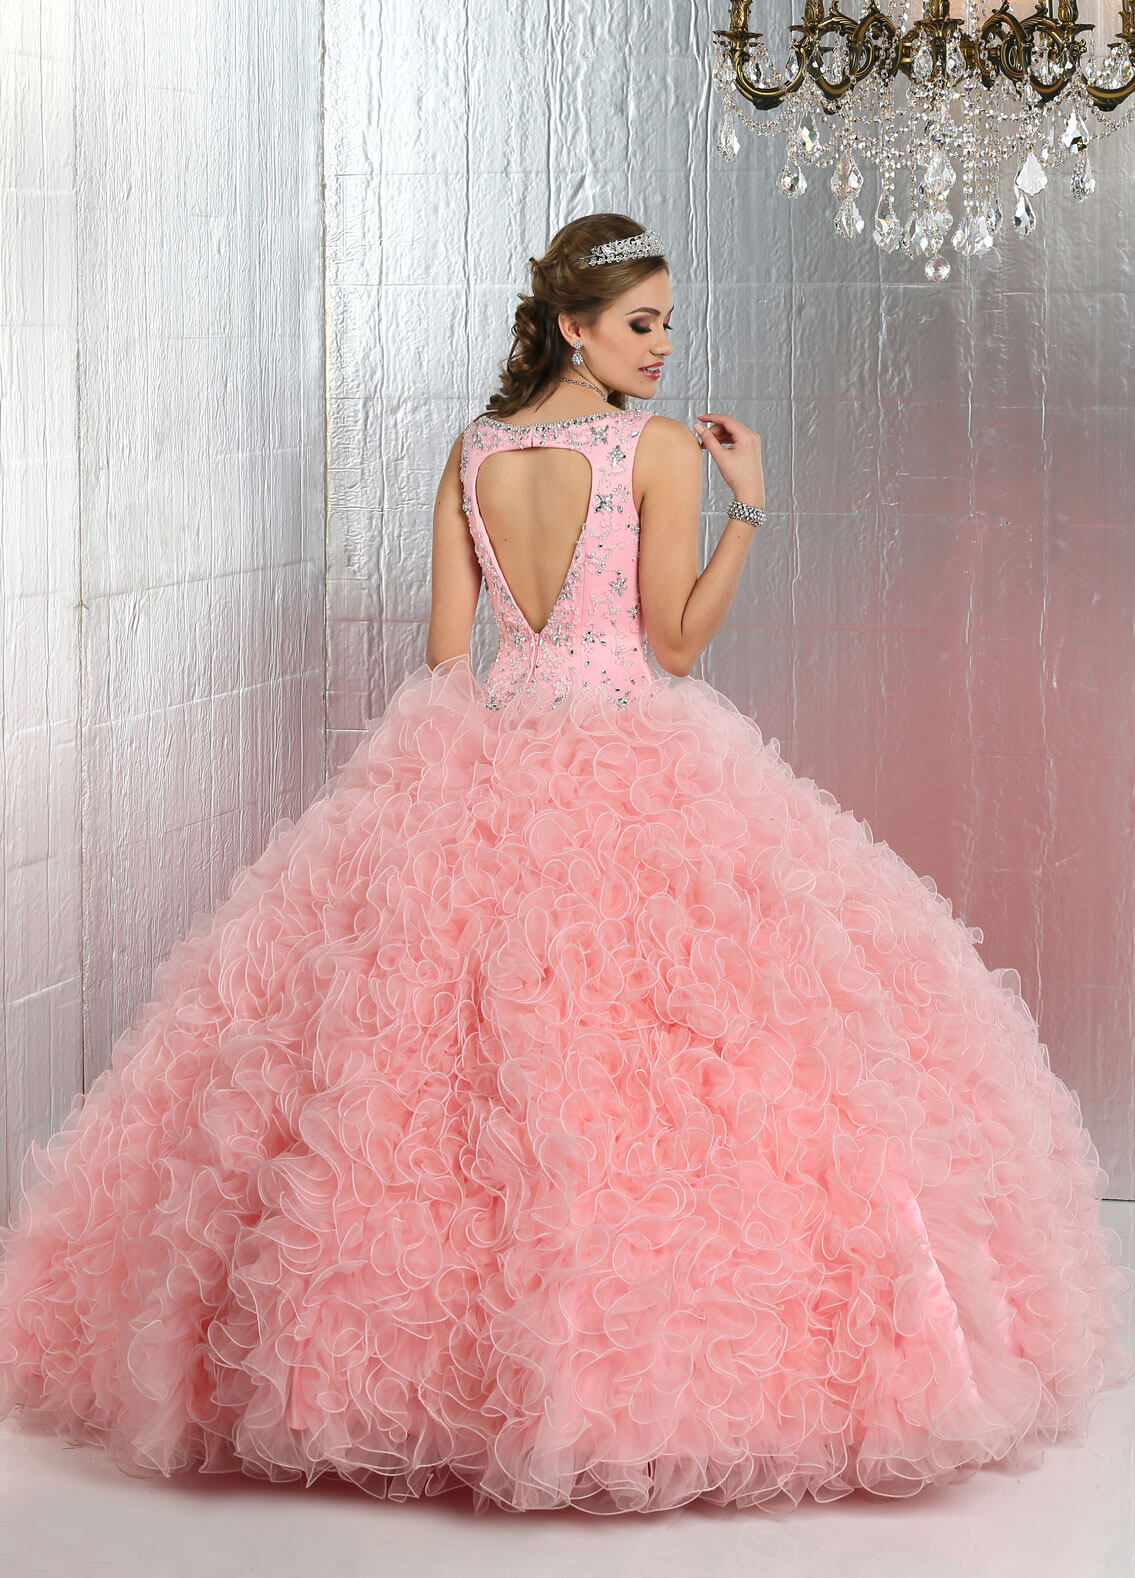 Pink backless princess ball gown dress